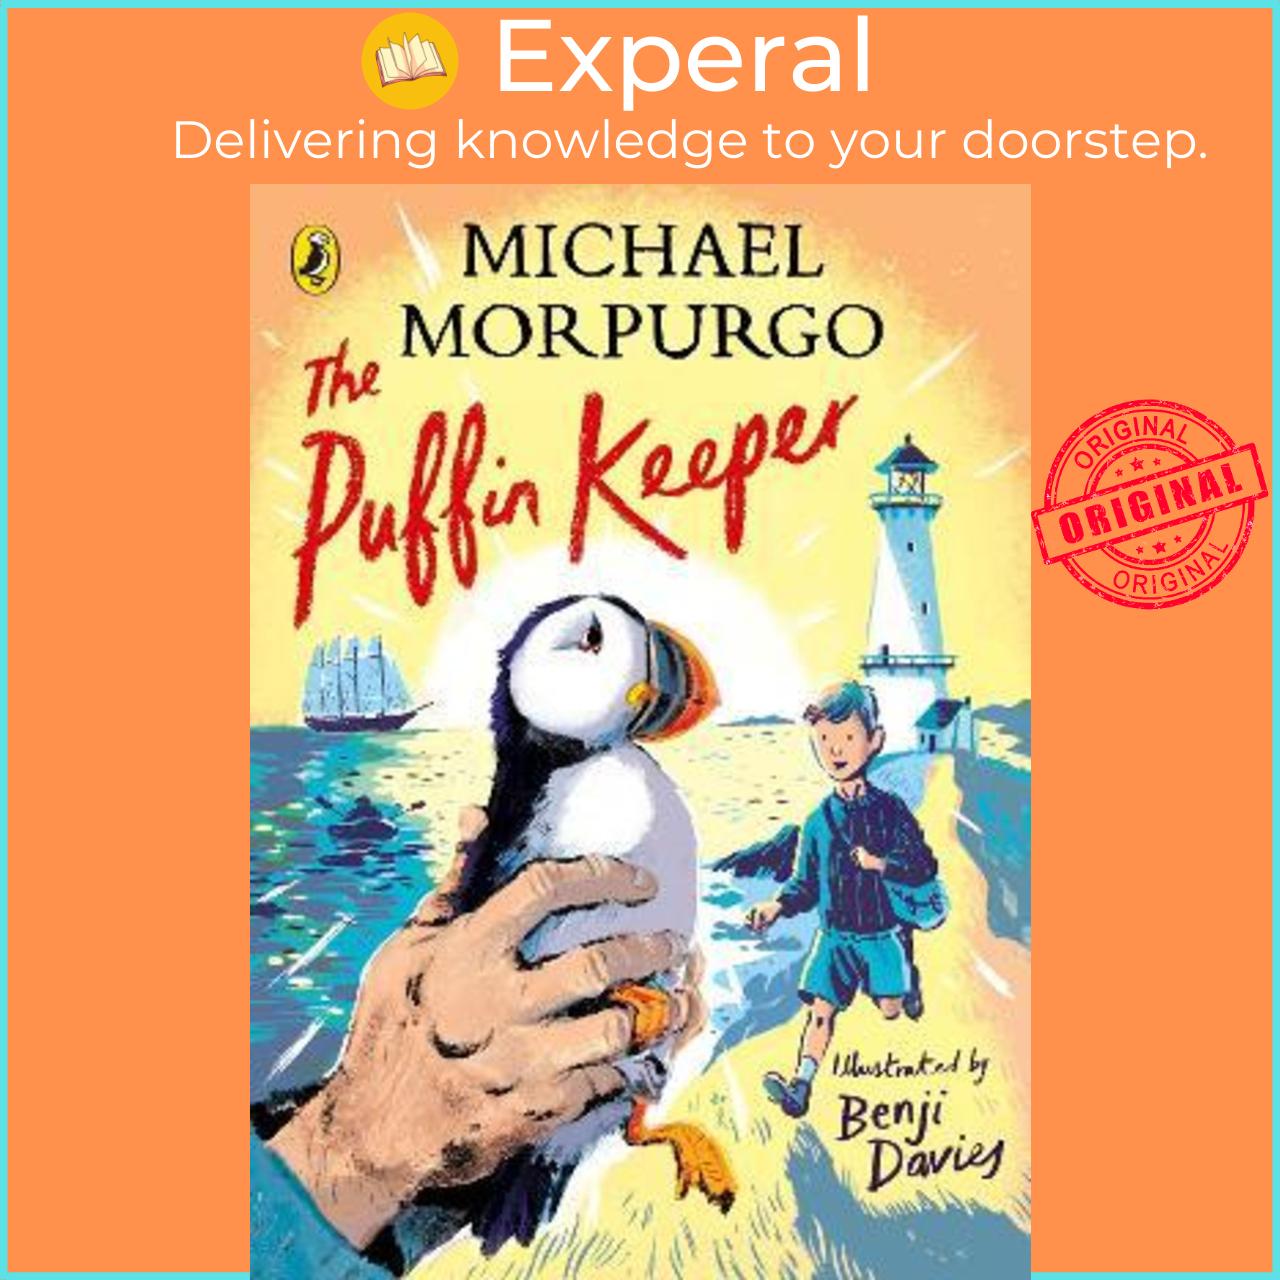 Sách - The Puffin Keeper by Michael Morpurgo,Benji Davies (UK edition, paperback)